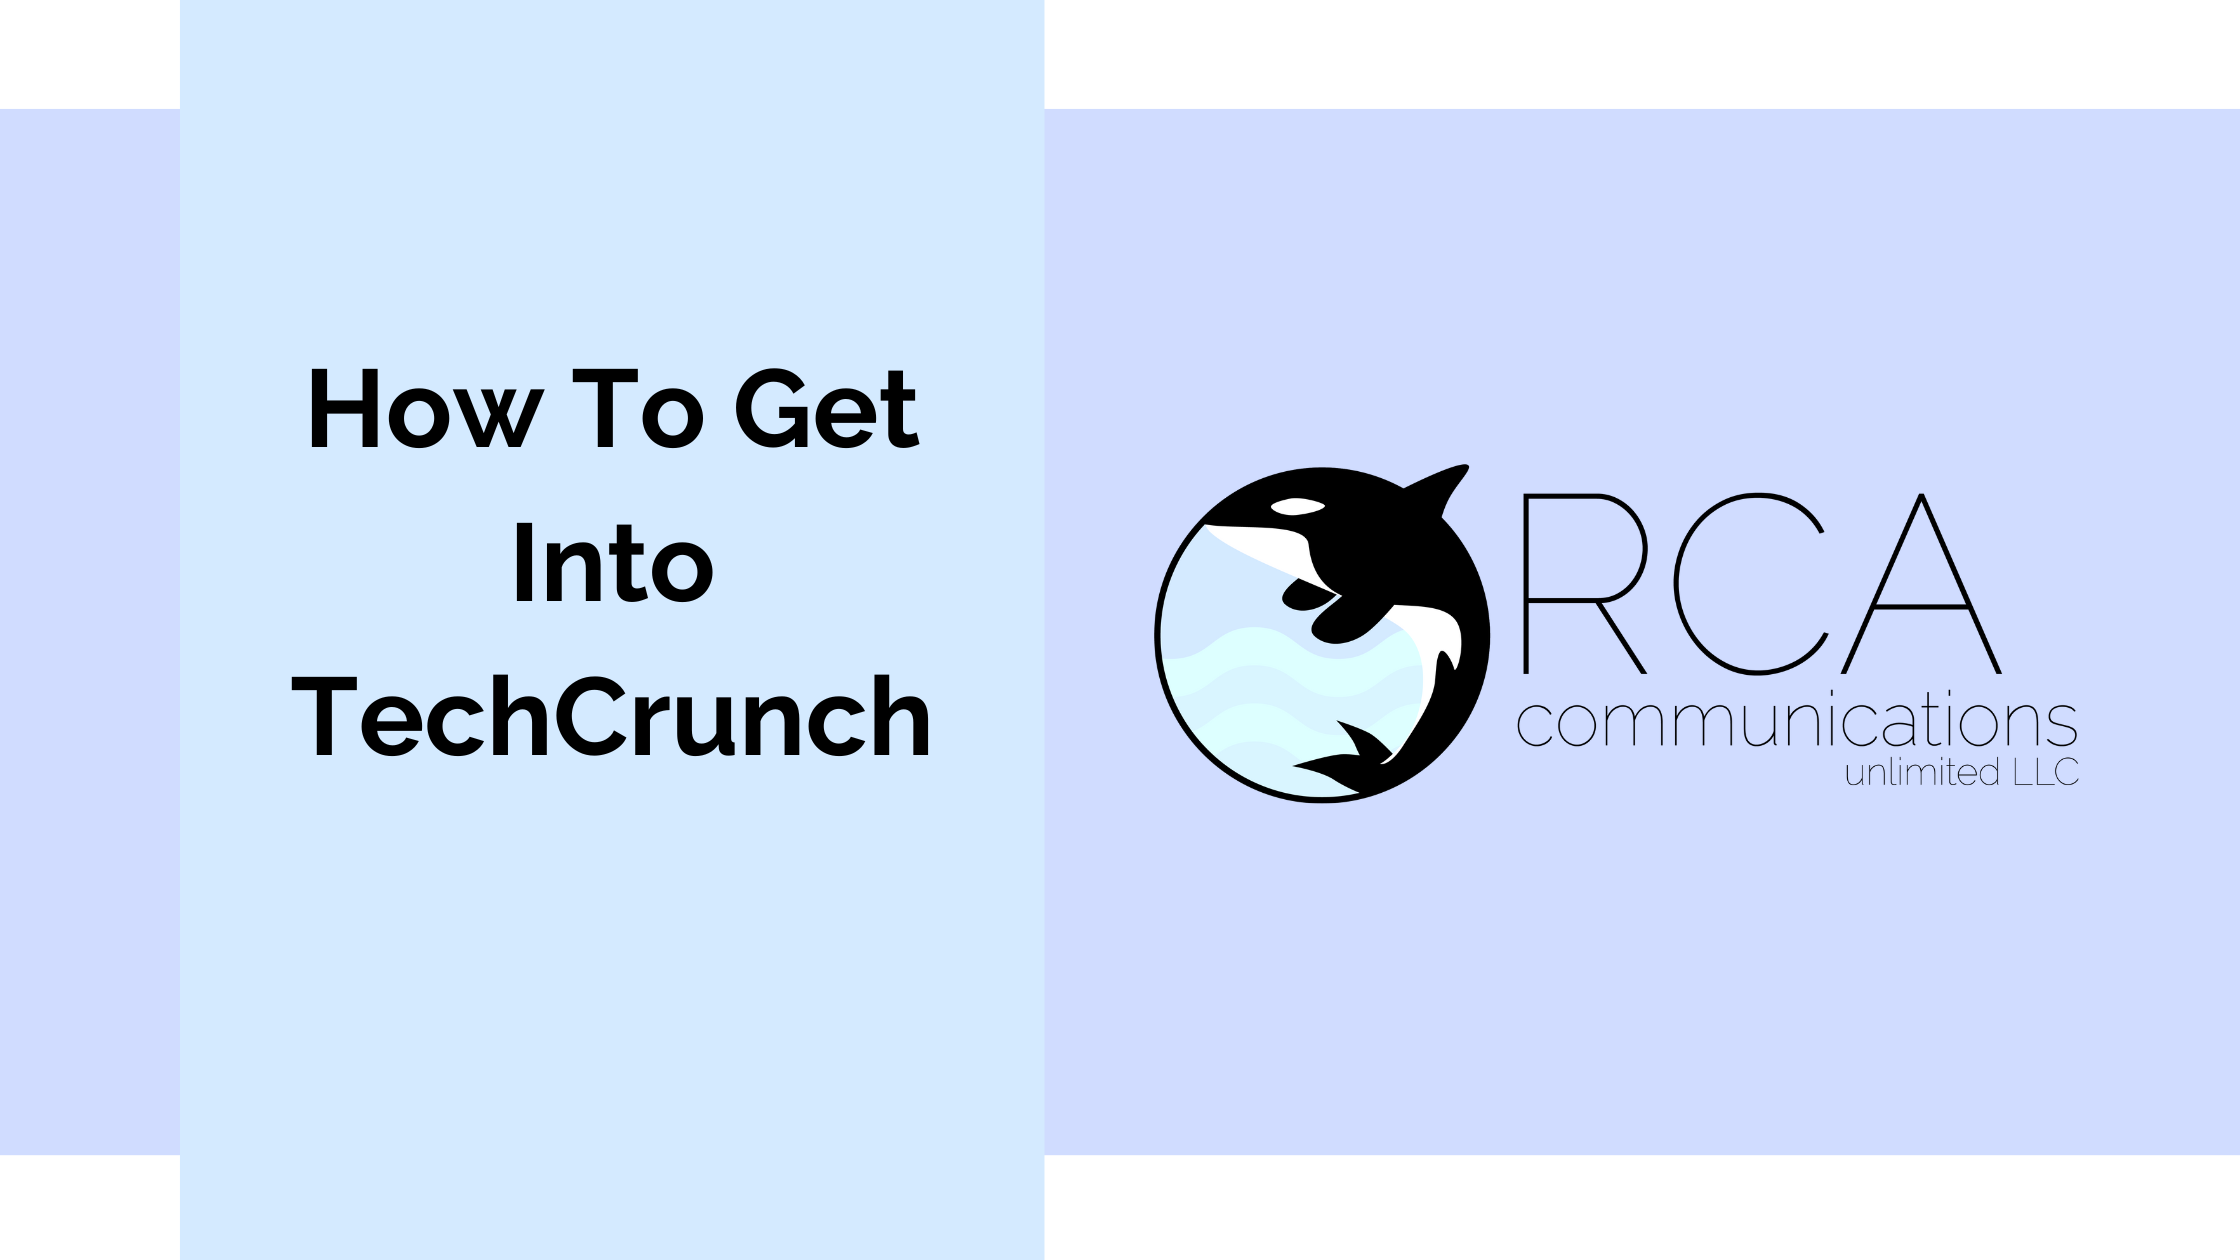 How to get into TechCrunch